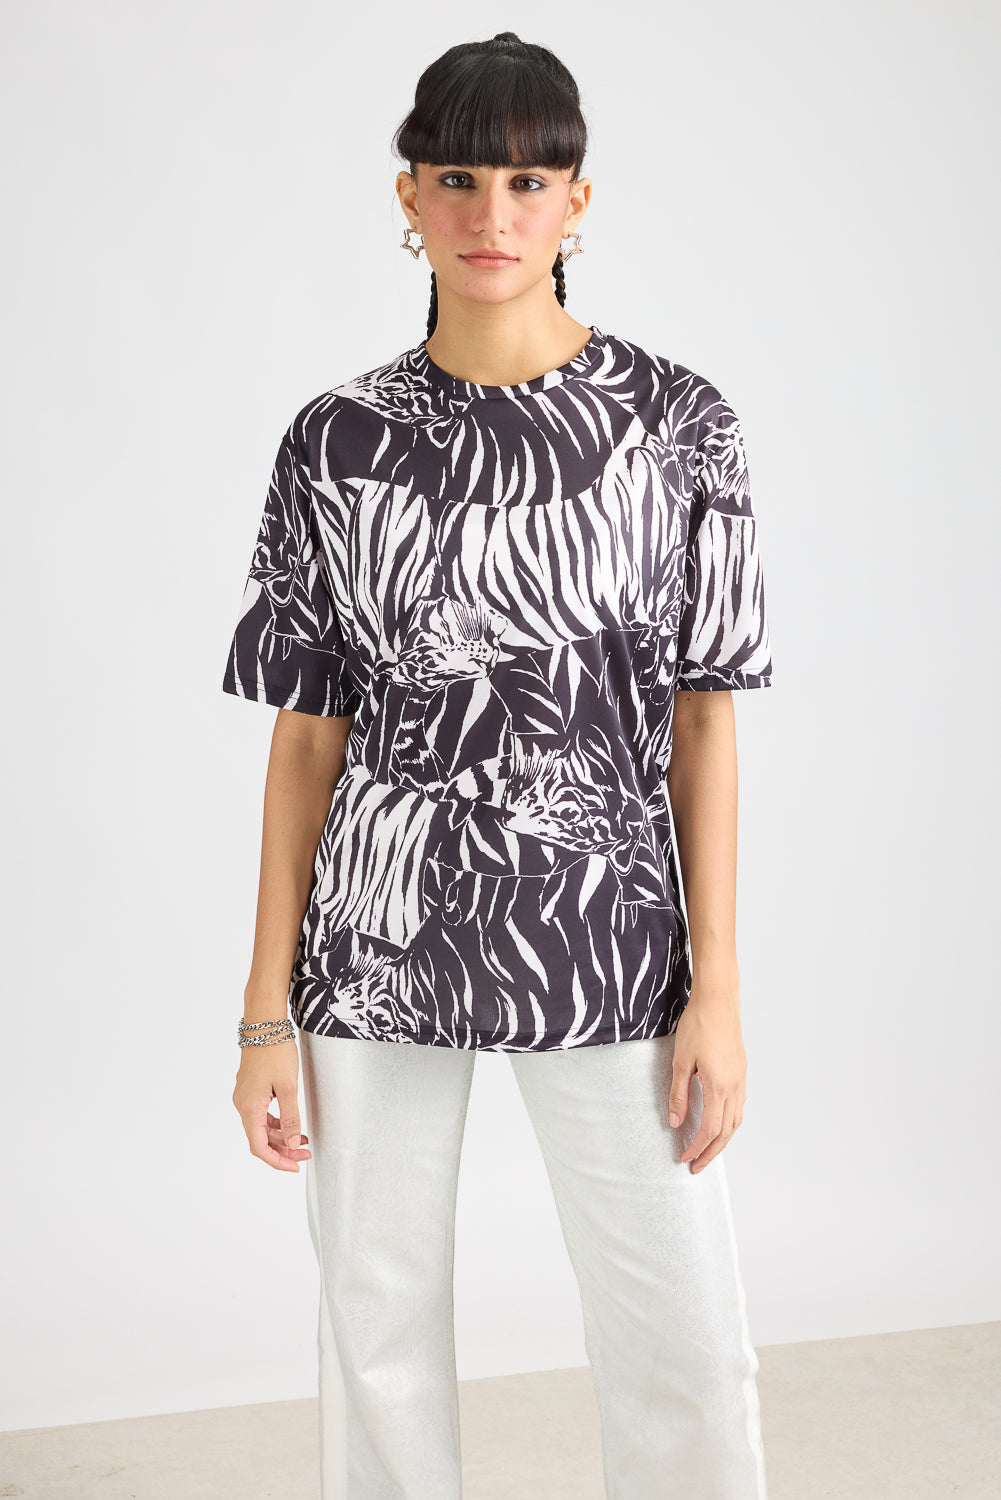 AOP Women's T-shirt - Tropical Black/White